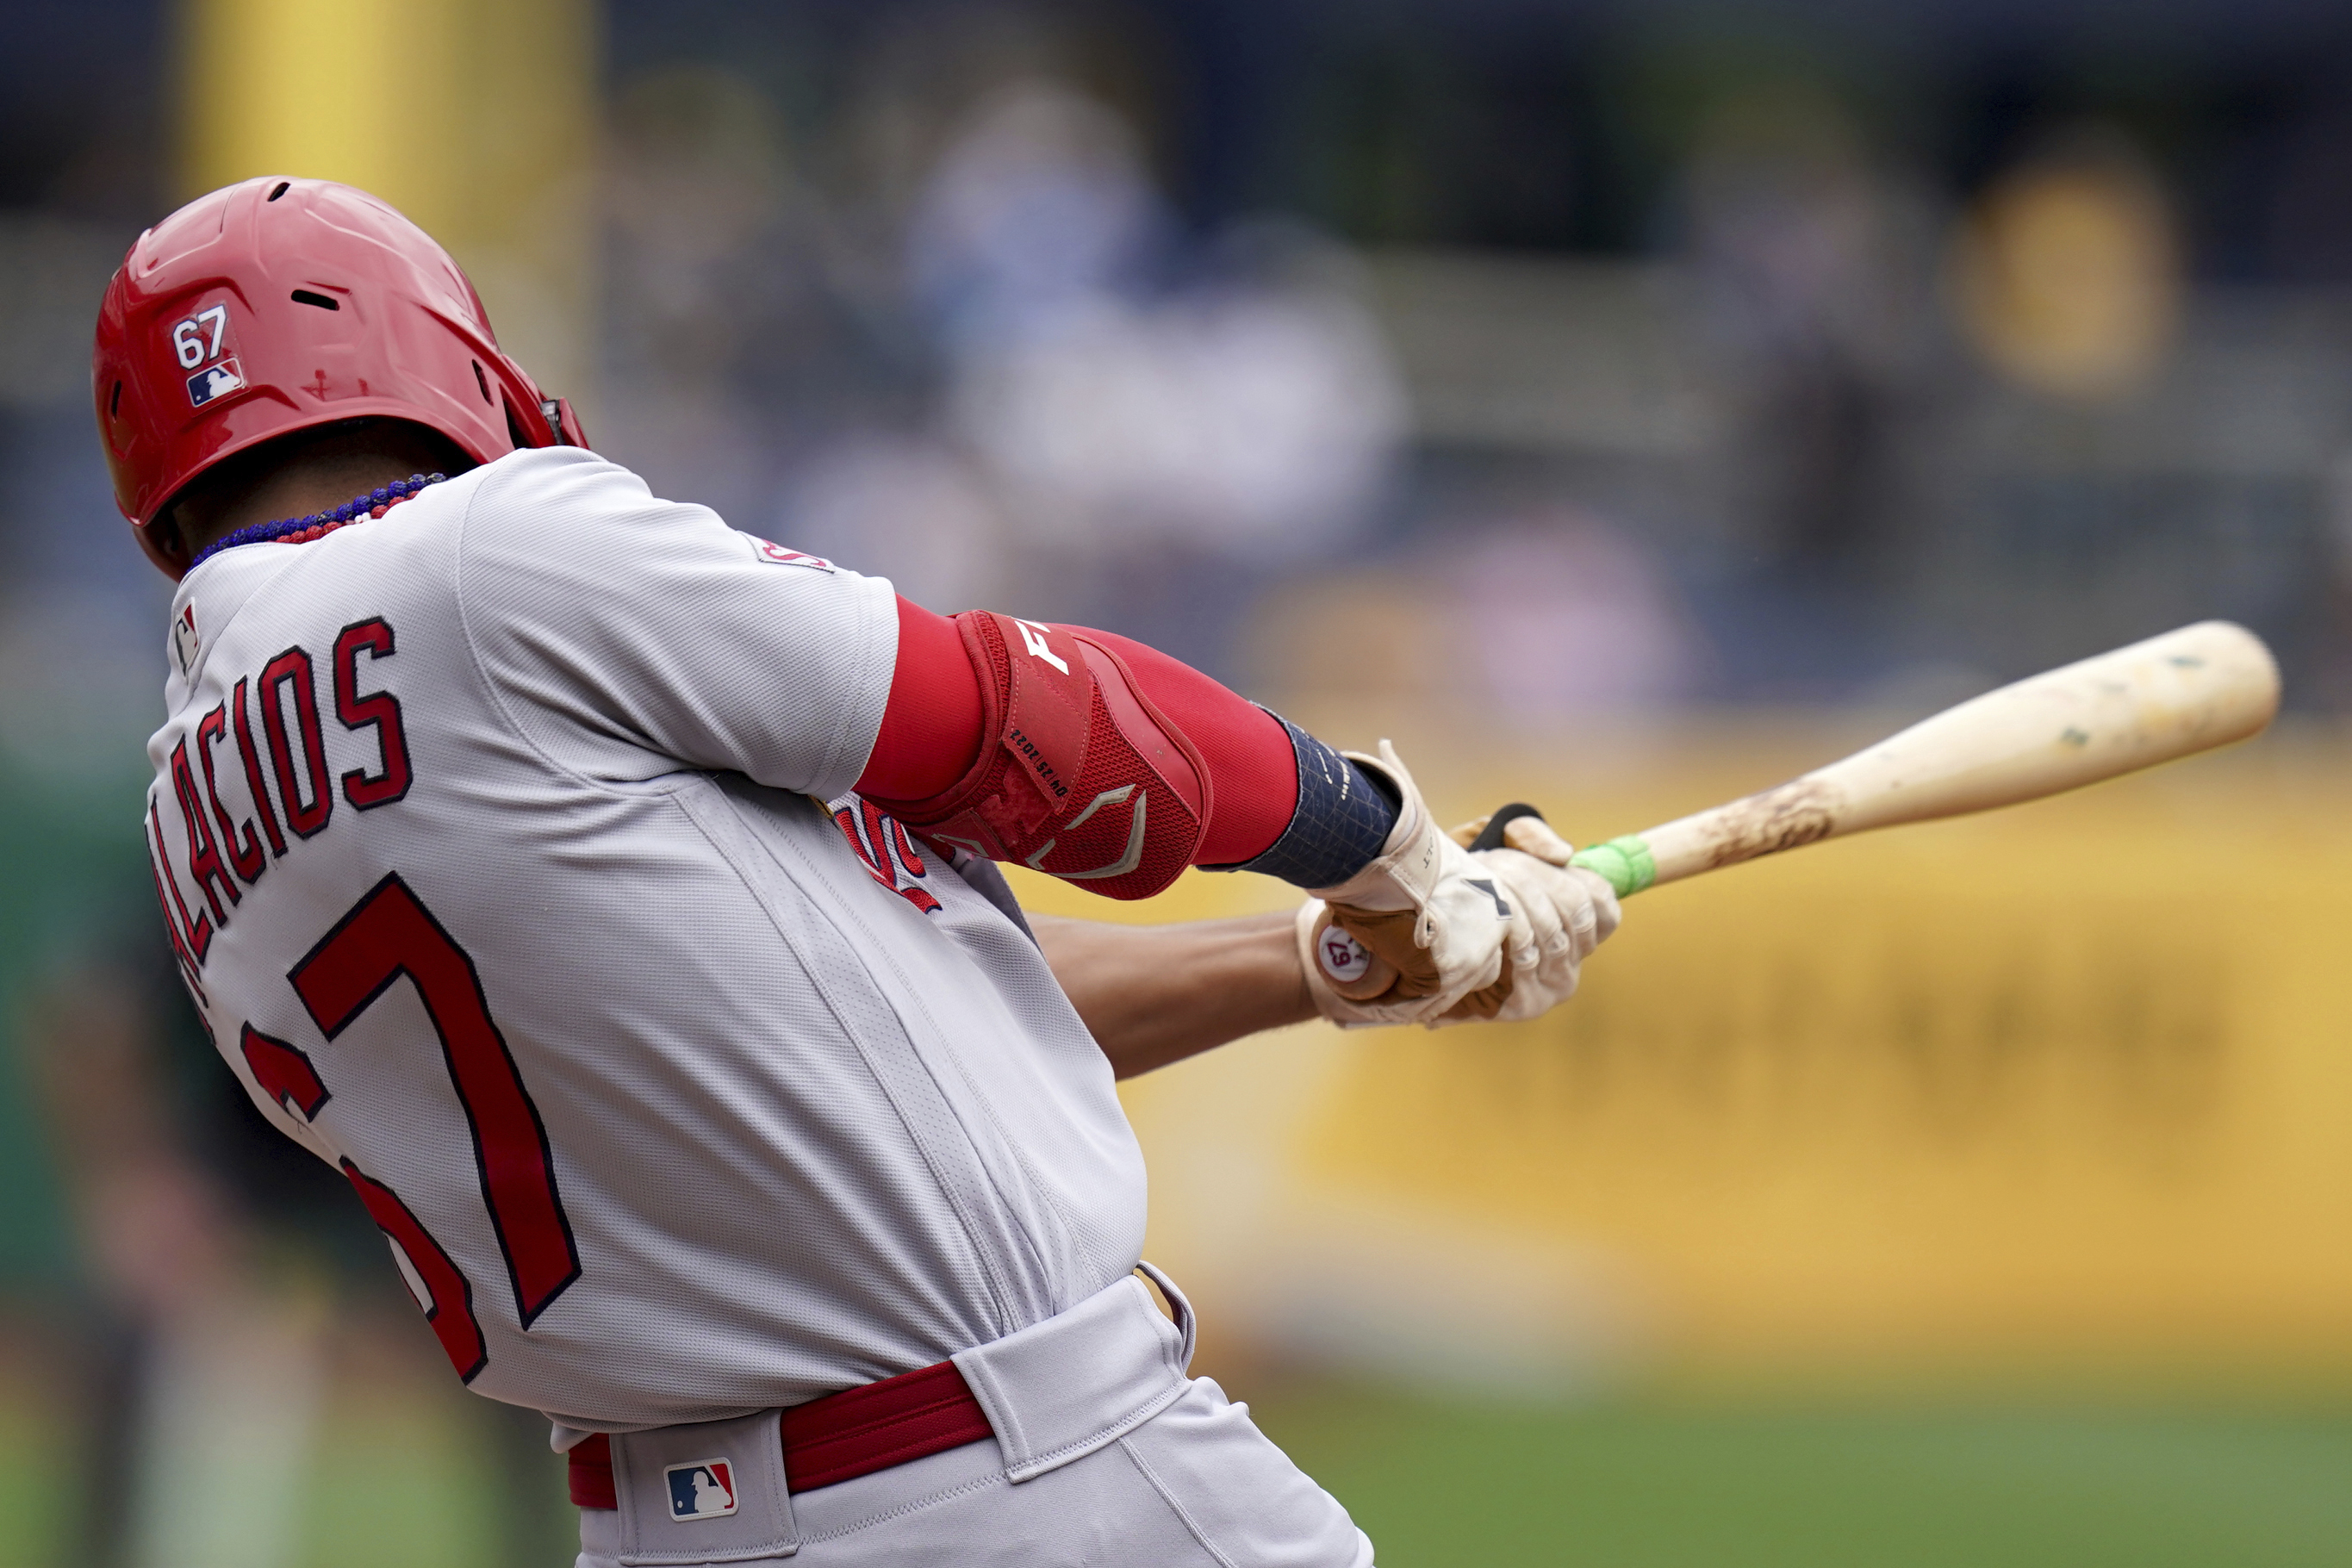 Baseball: Shohei Ohtani slugs MLB-leading 23rd homer, 150th of